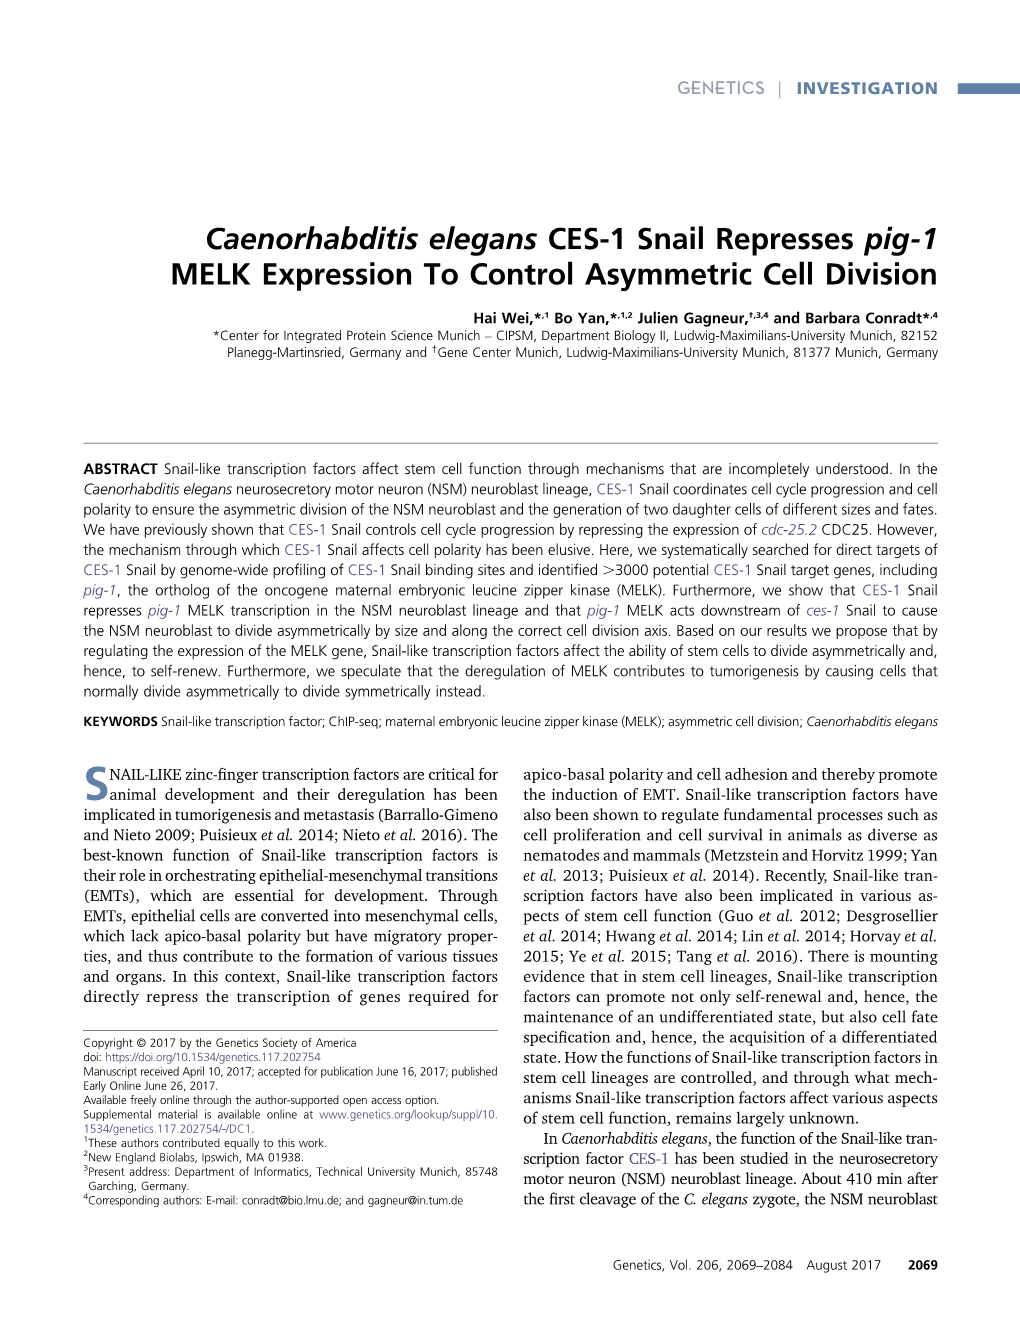 Caenorhabditis Elegans CES-1 Snail Represses Pig-1 MELK Expression to Control Asymmetric Cell Division